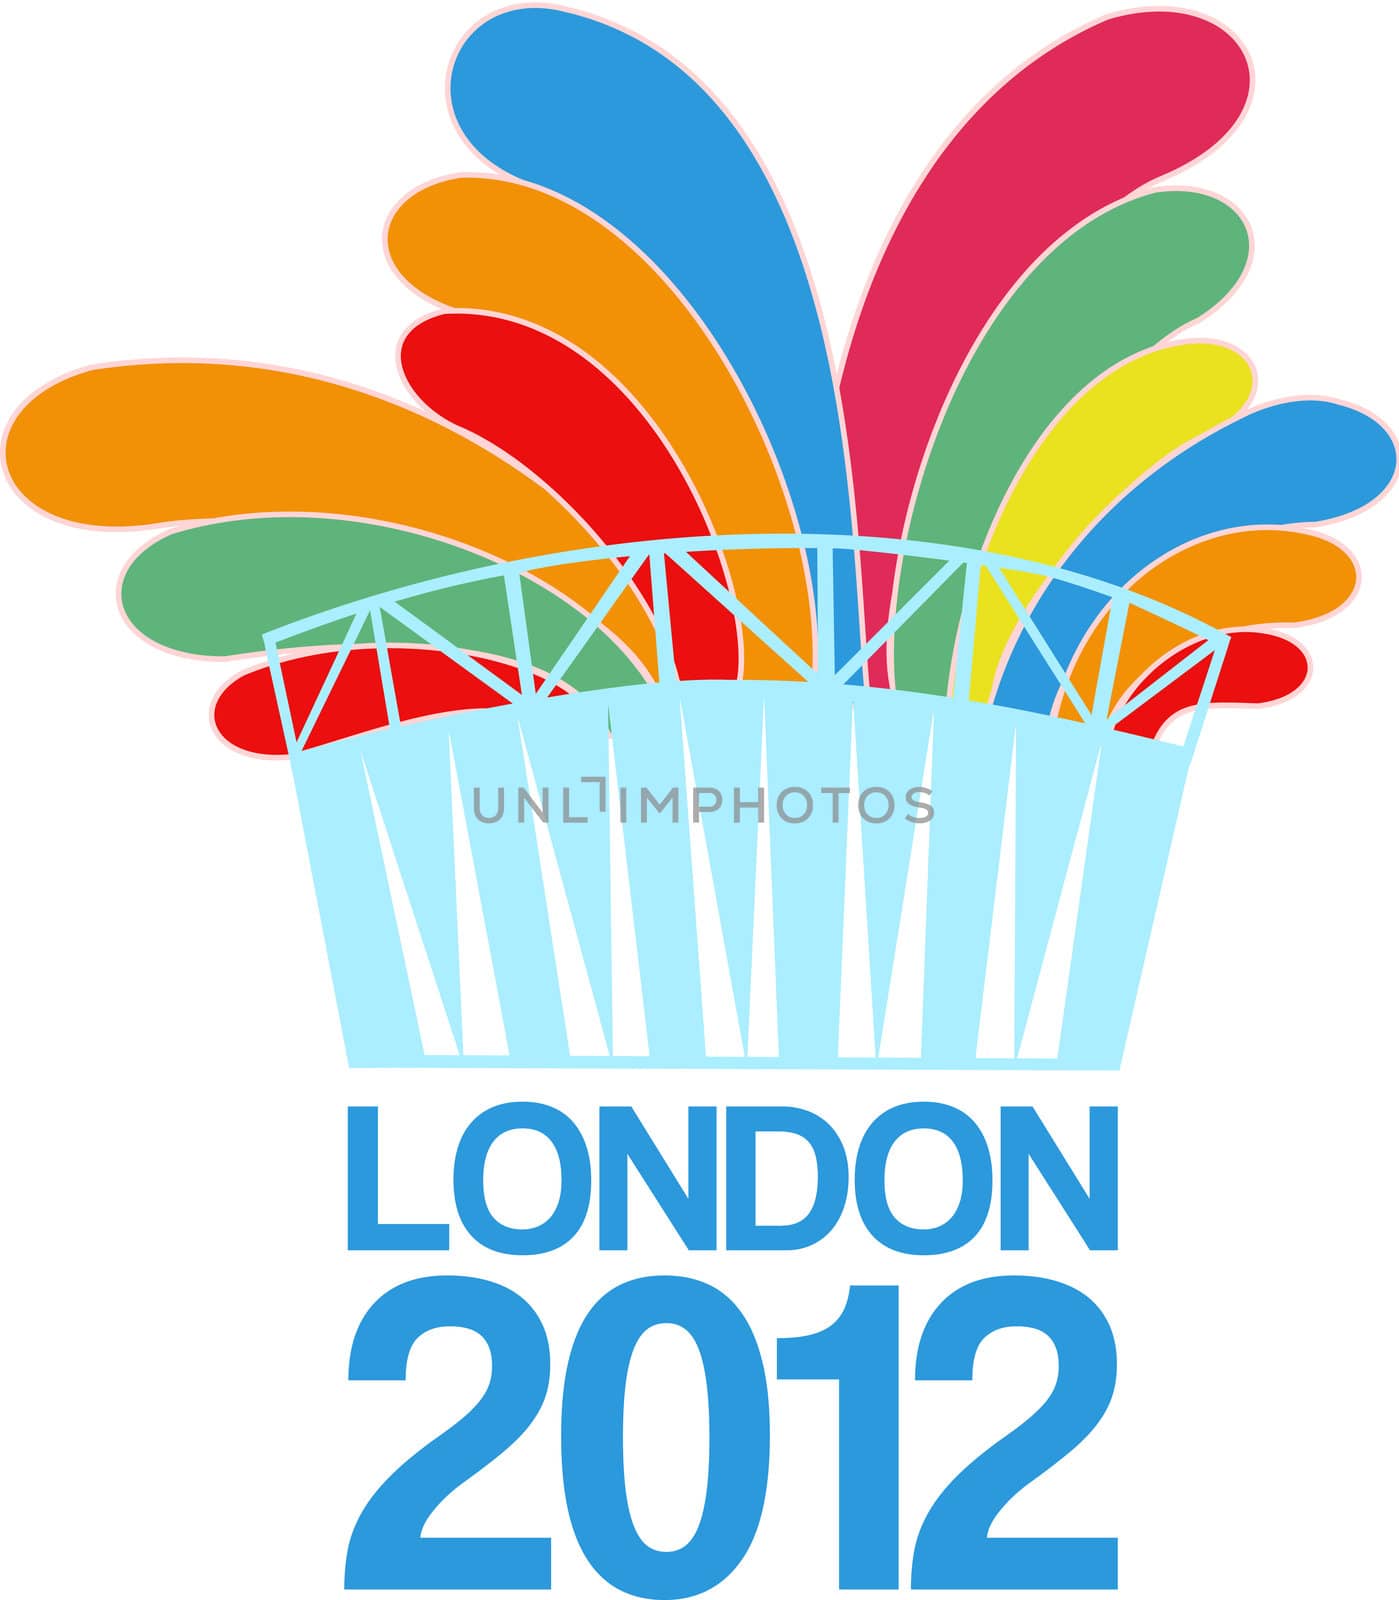 London 2012 symbol by trrent